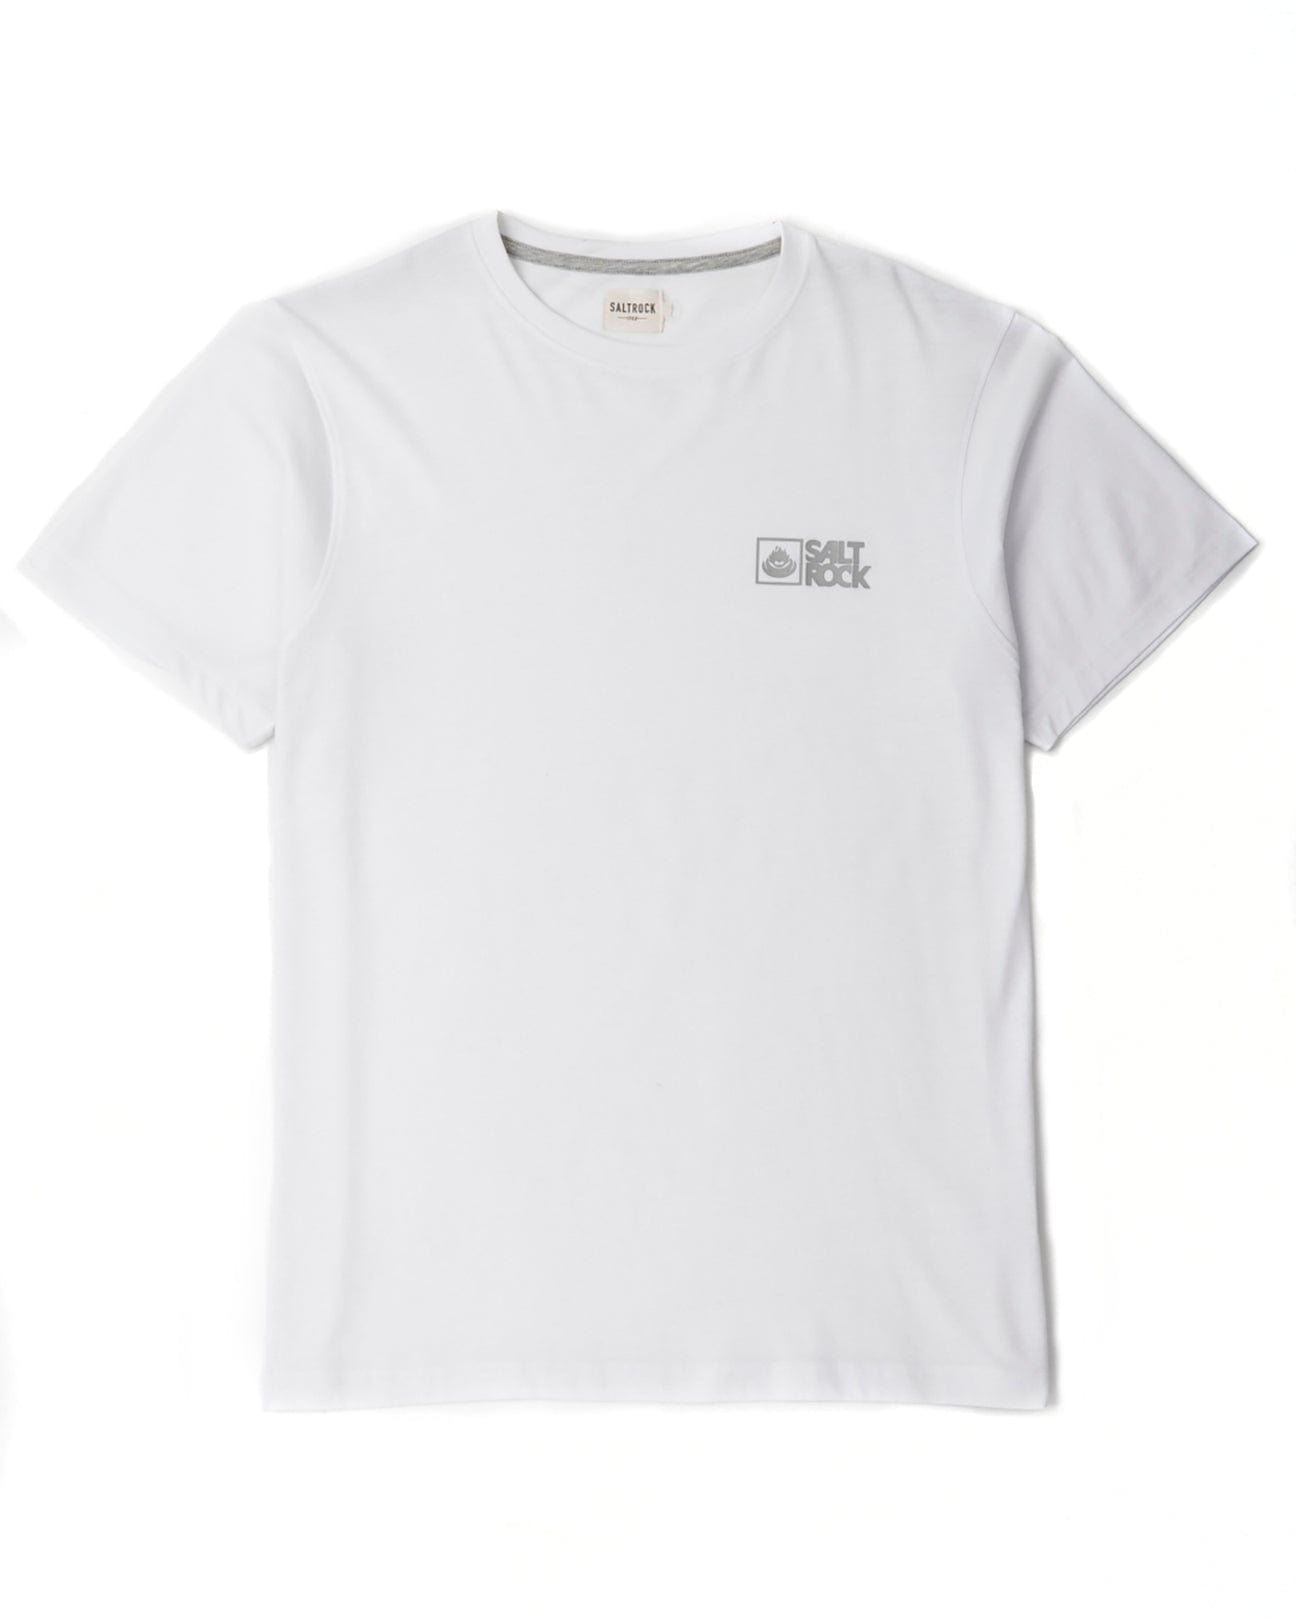 A Saltrock Corp 20 - Mens Short Sleeve T-Shirt - White, an everyday essential.